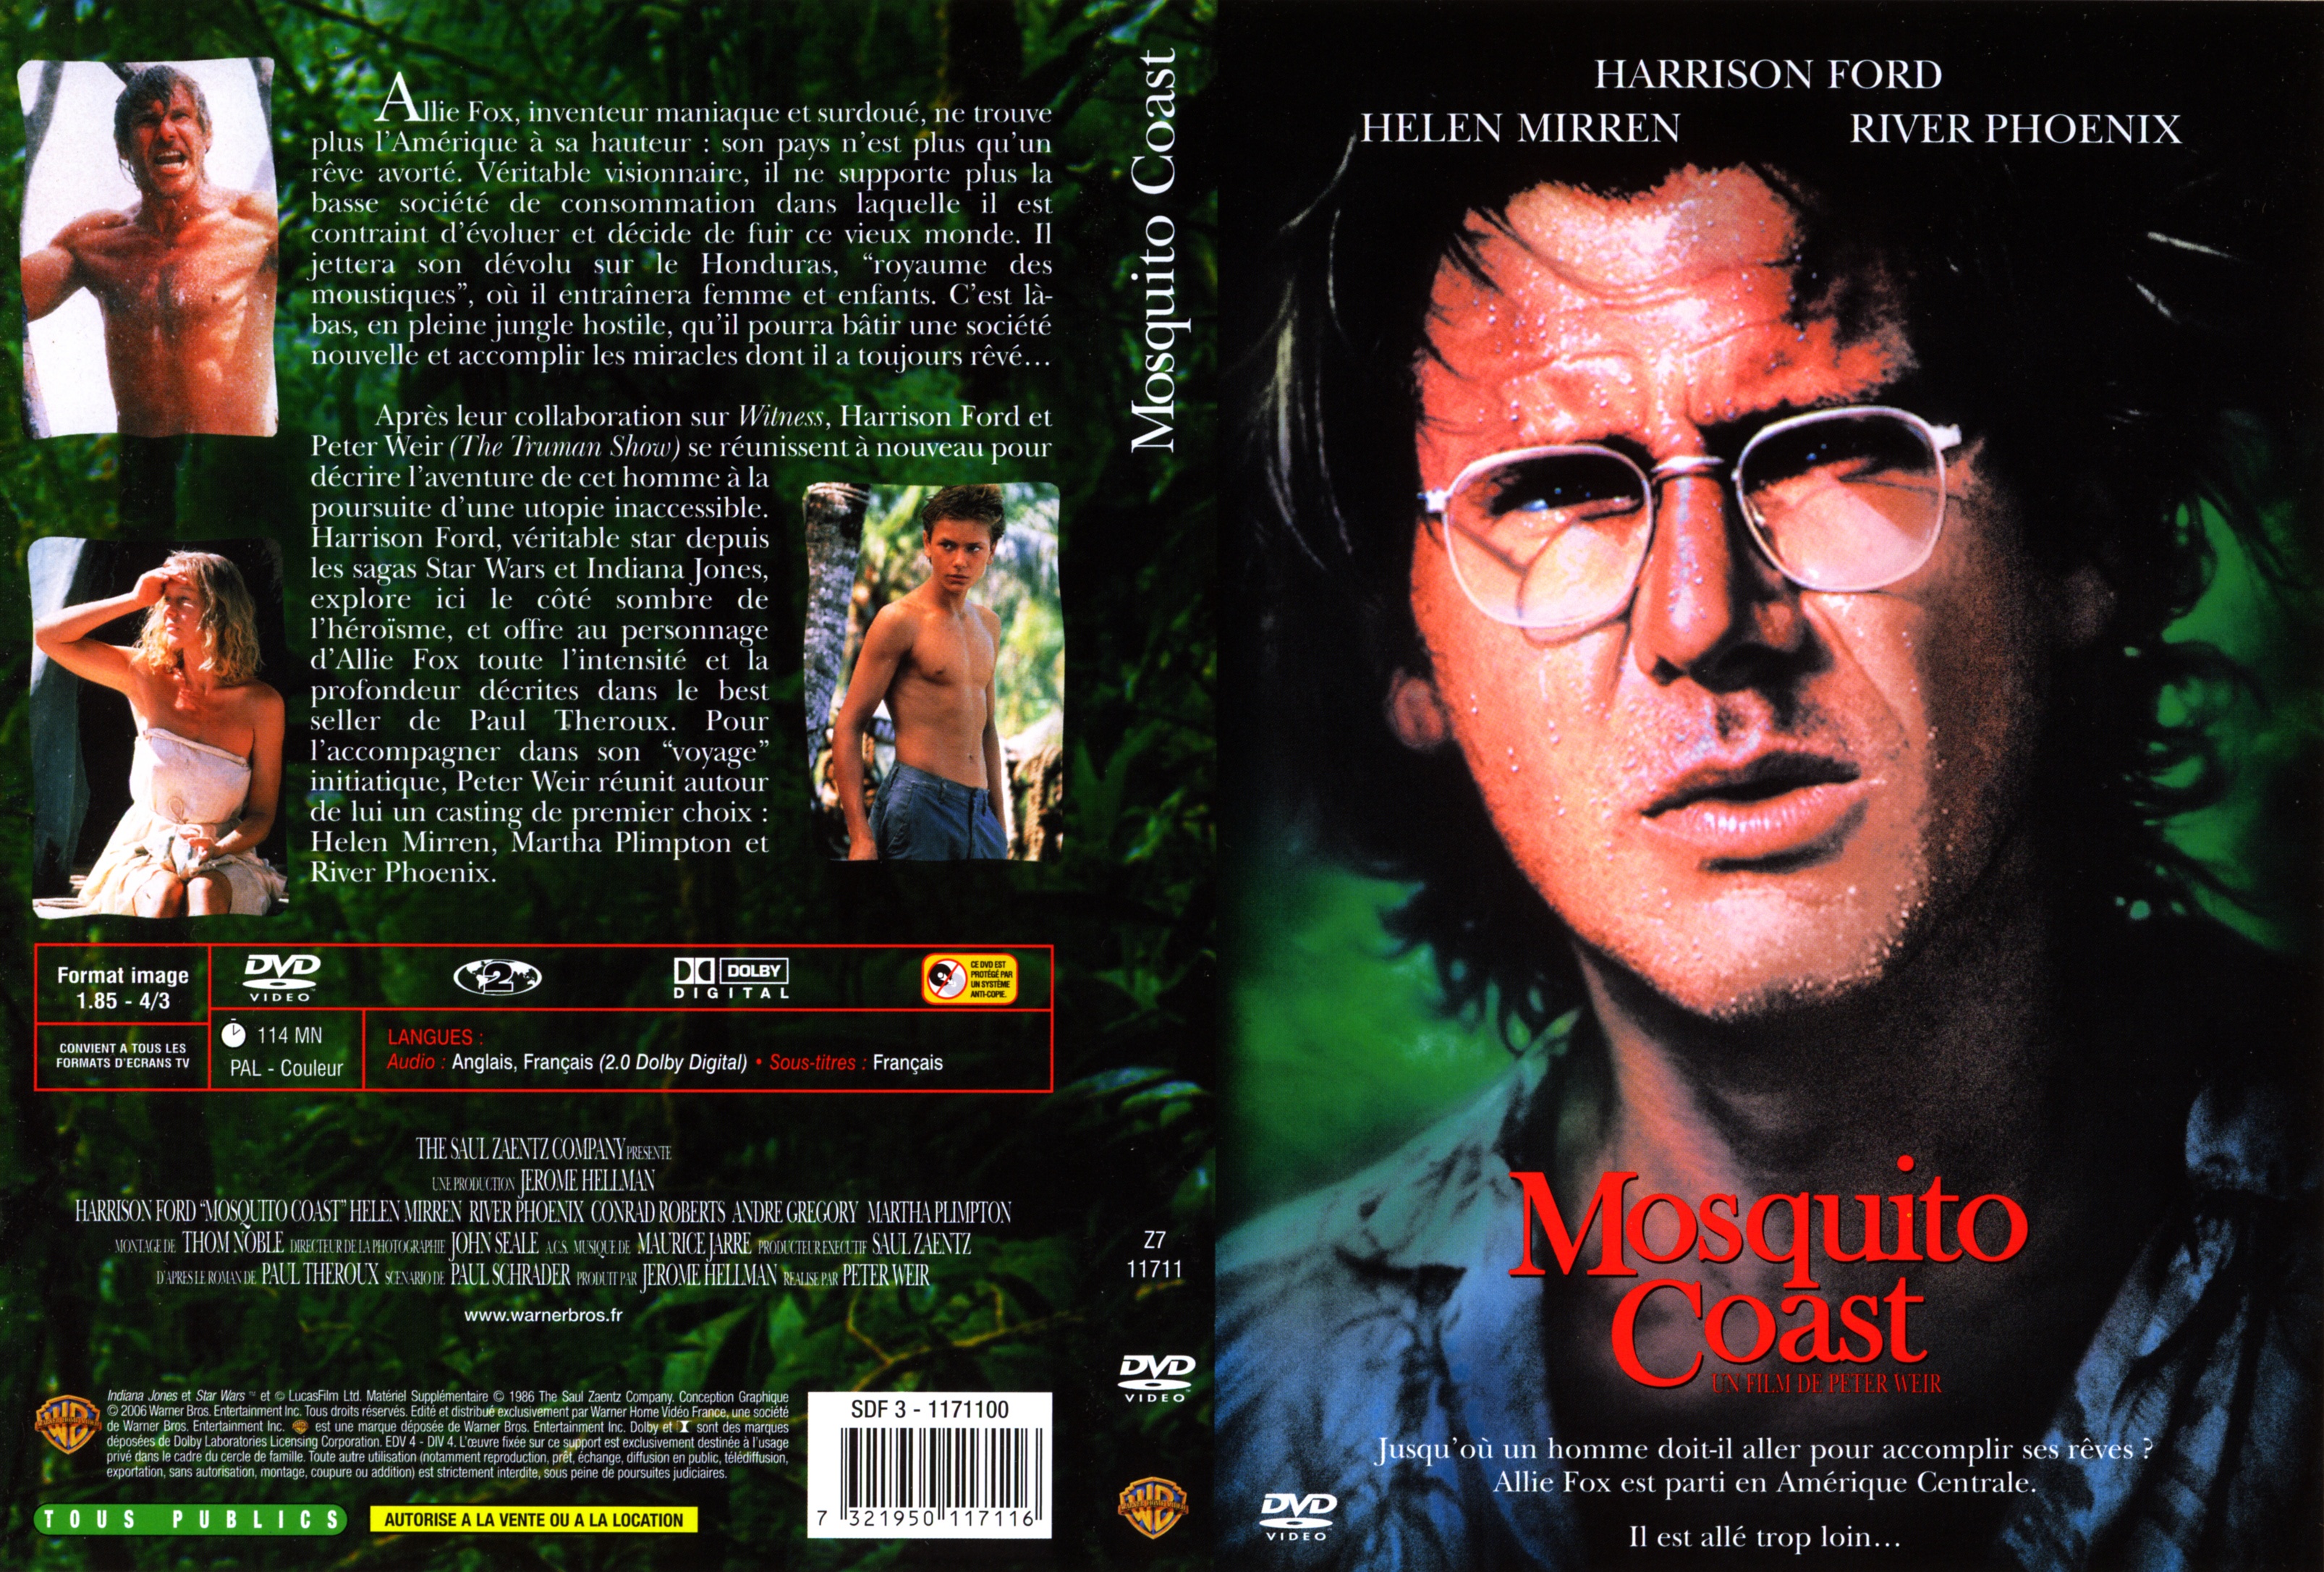 Jaquette DVD Mosquito coast